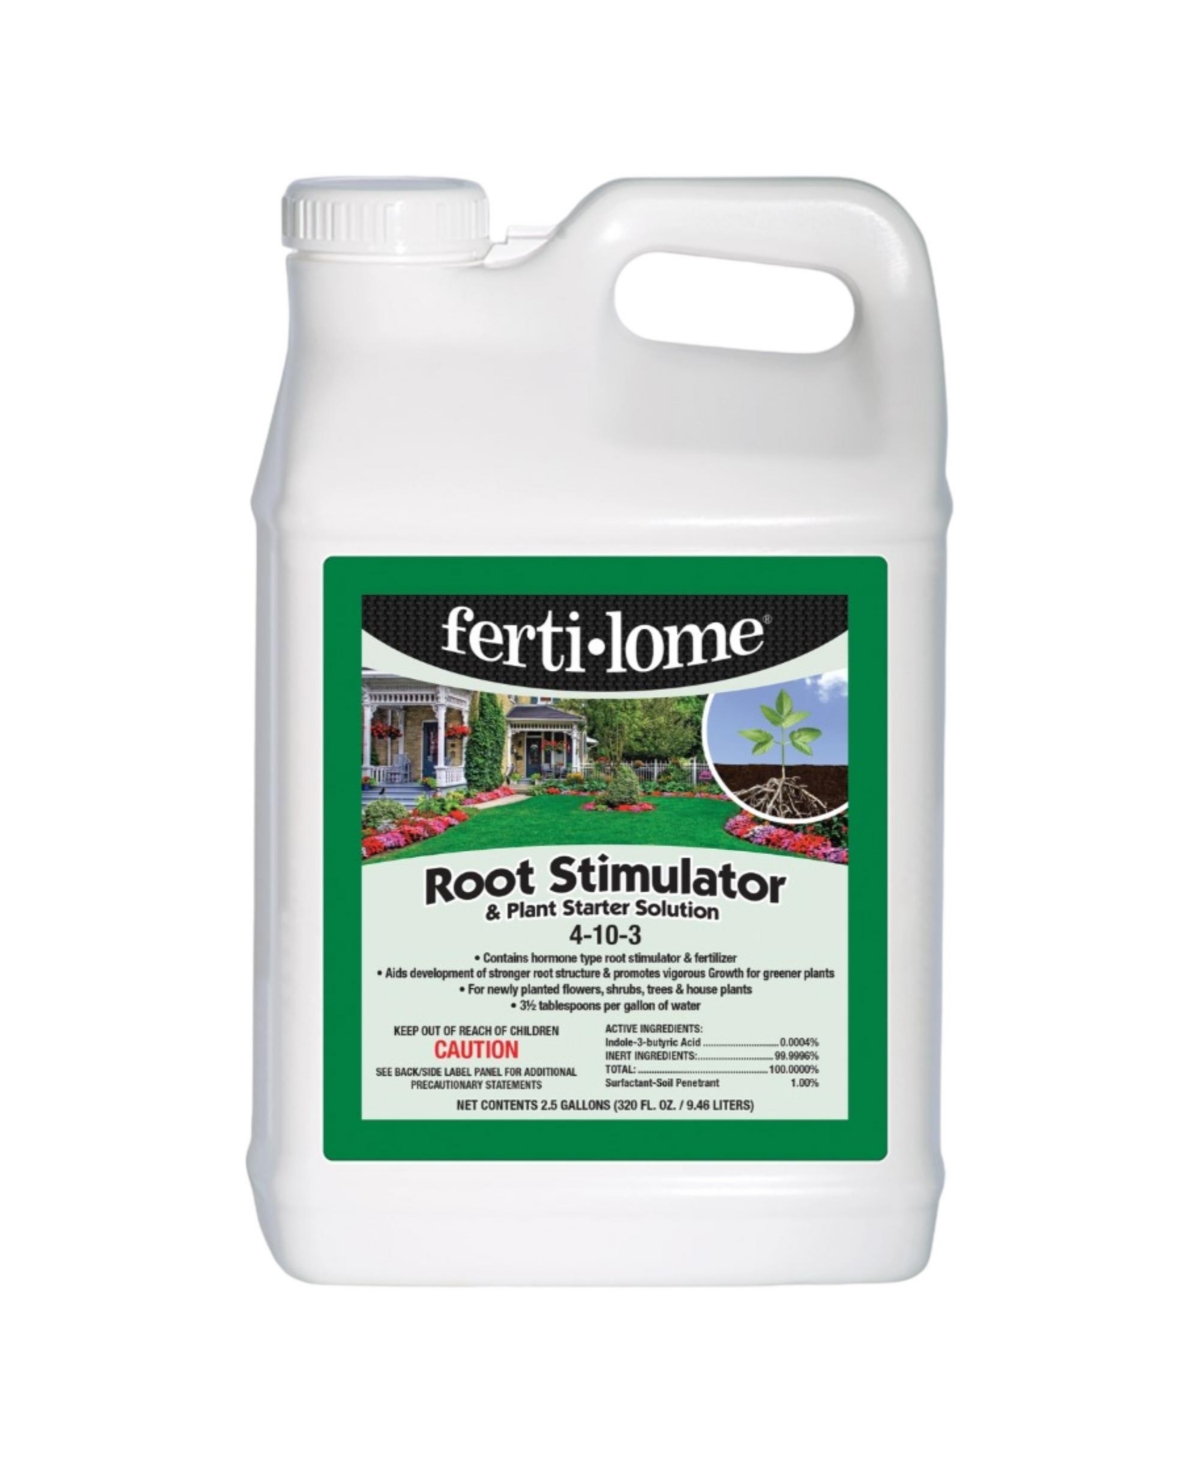 Vpg Fertilome 10653 Root Stimulator and Plant Starter Solution 4-10-3 2.5 gal - Multi